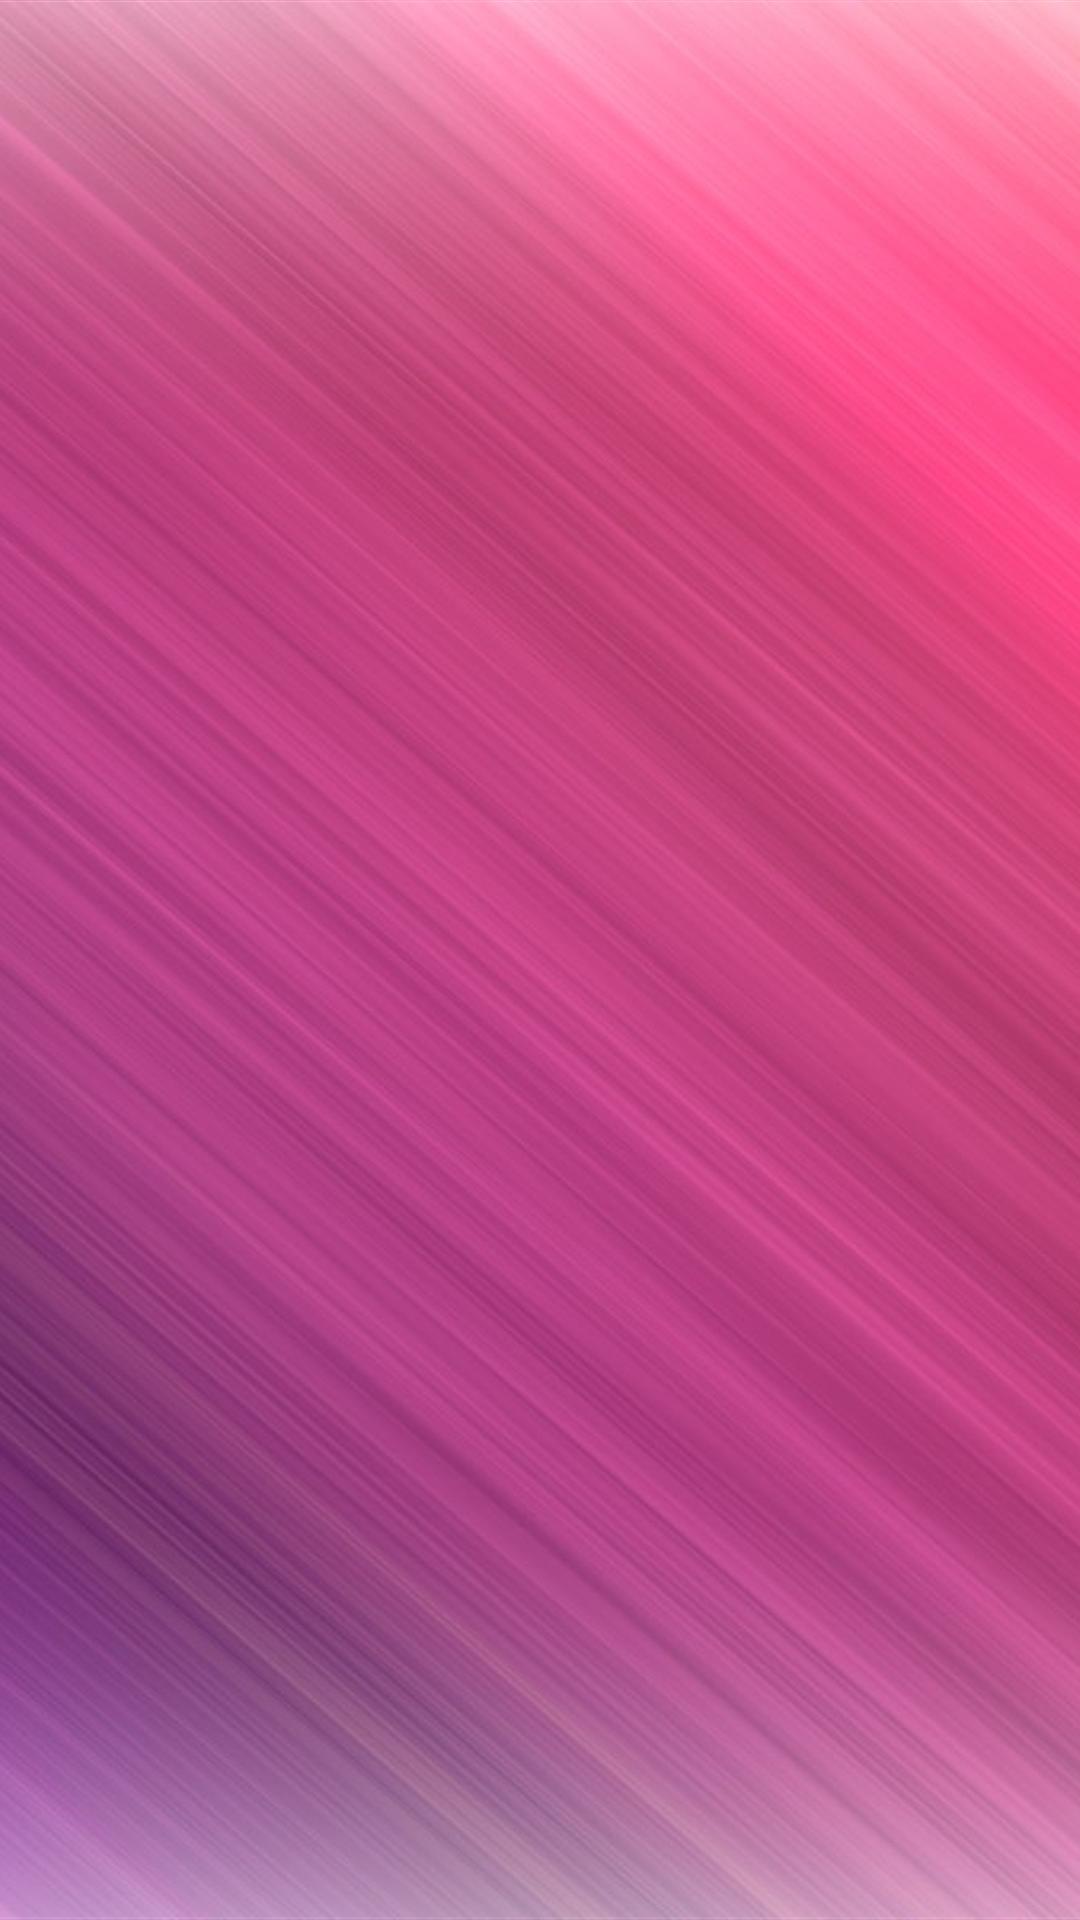 rosa fondo de pantalla para iphone,rosado,violeta,púrpura,rojo,lila